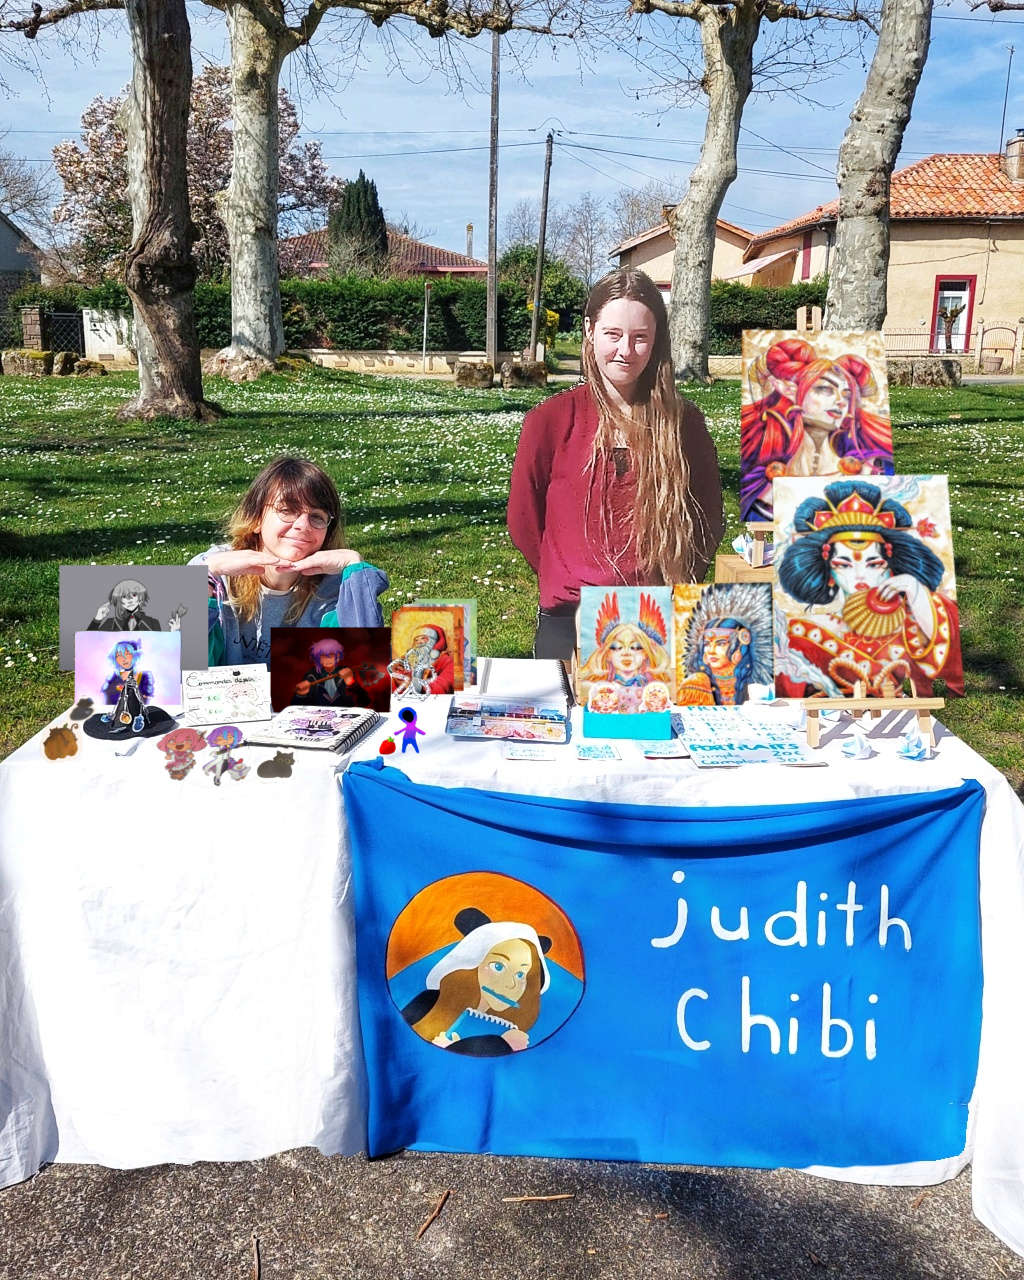  Judith Chibi et Miky